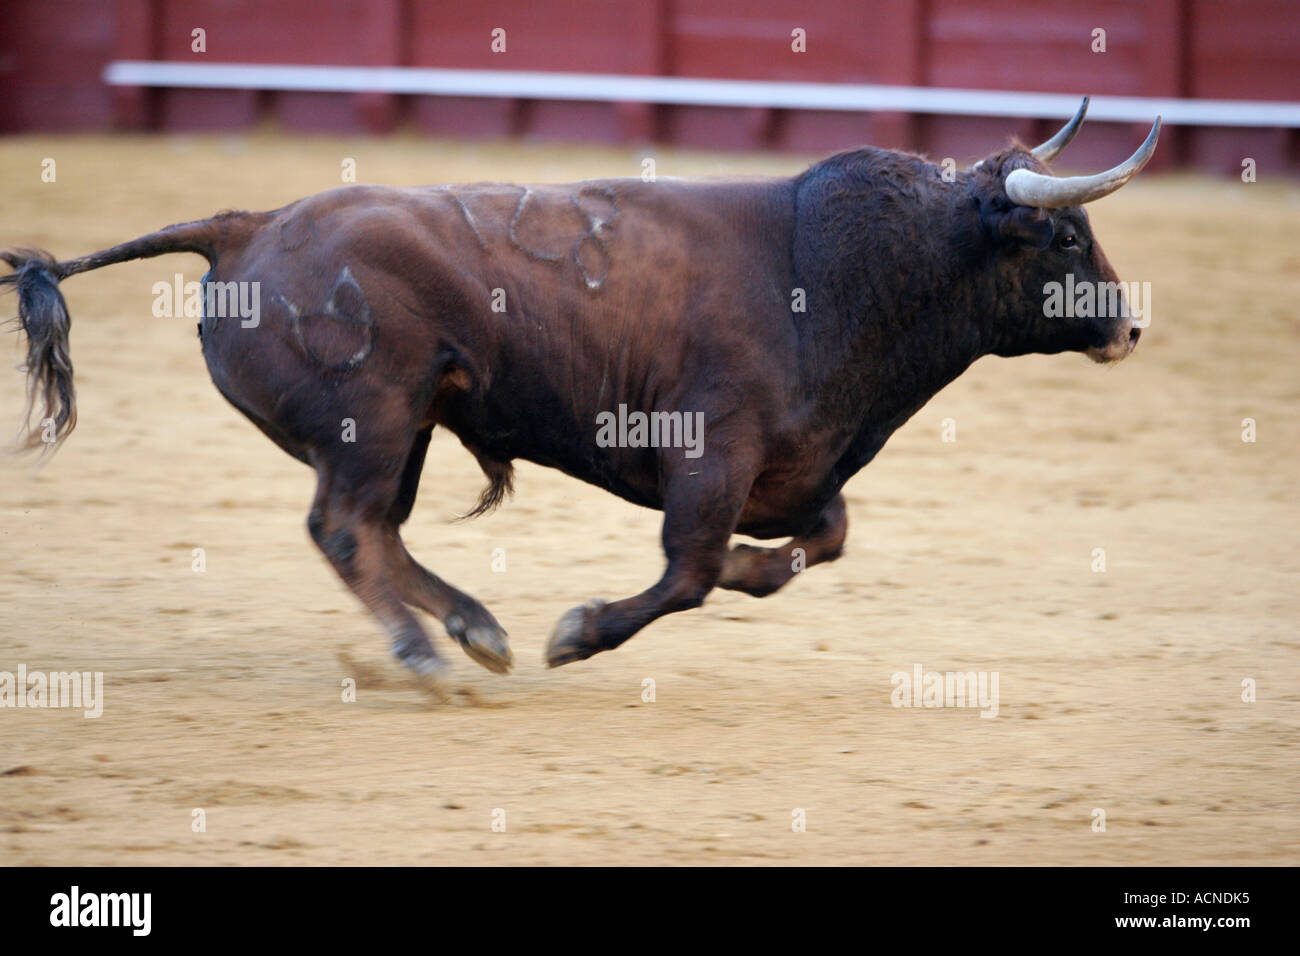 the superb figure of a fierce bull at Maestranza bullring at start of a bullfight Stock Photo